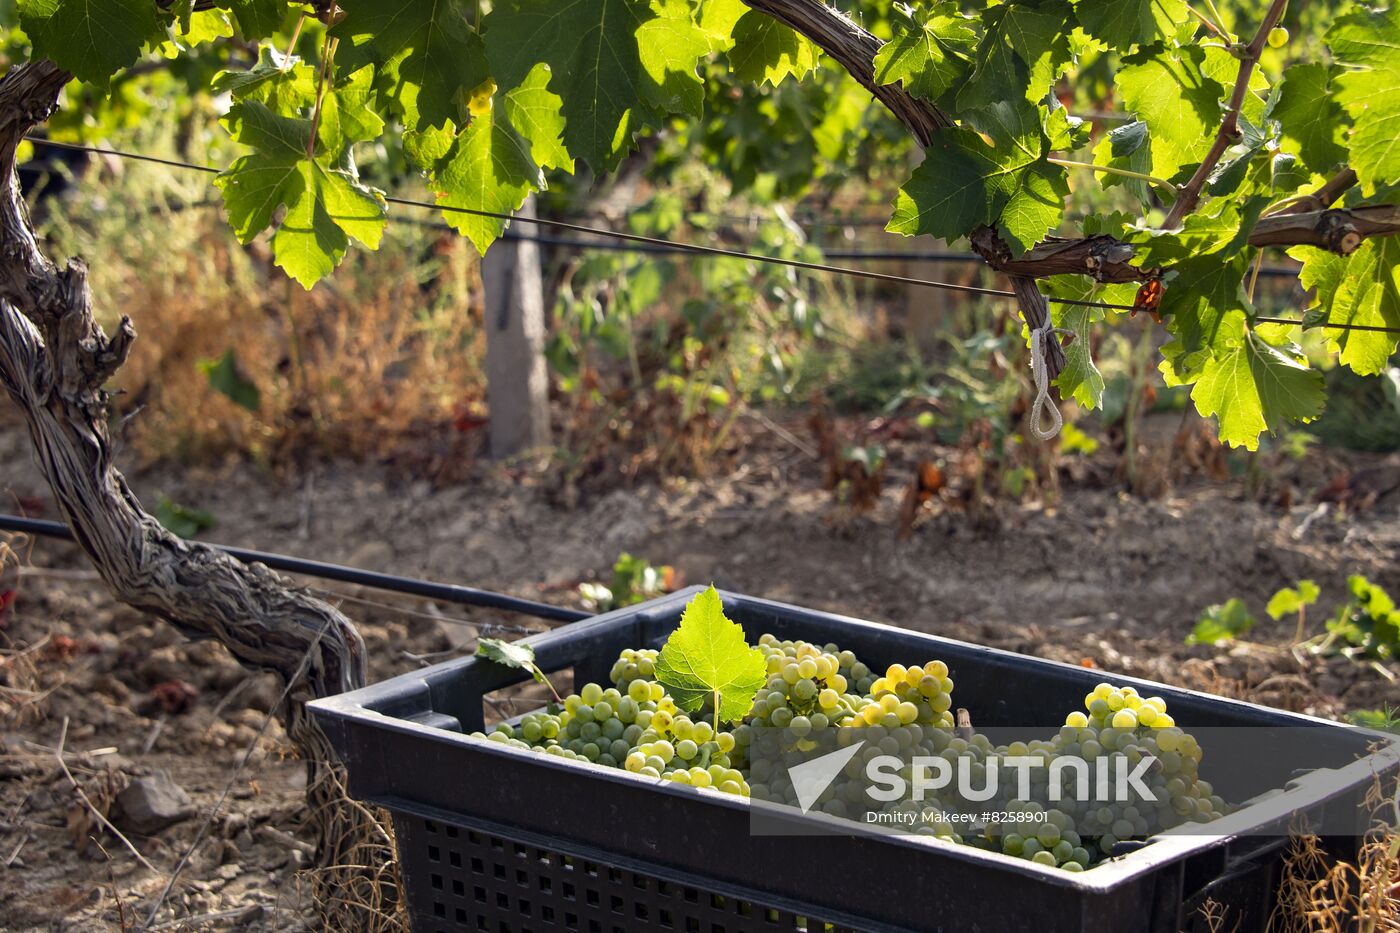 Russia Crimea Winegrowing